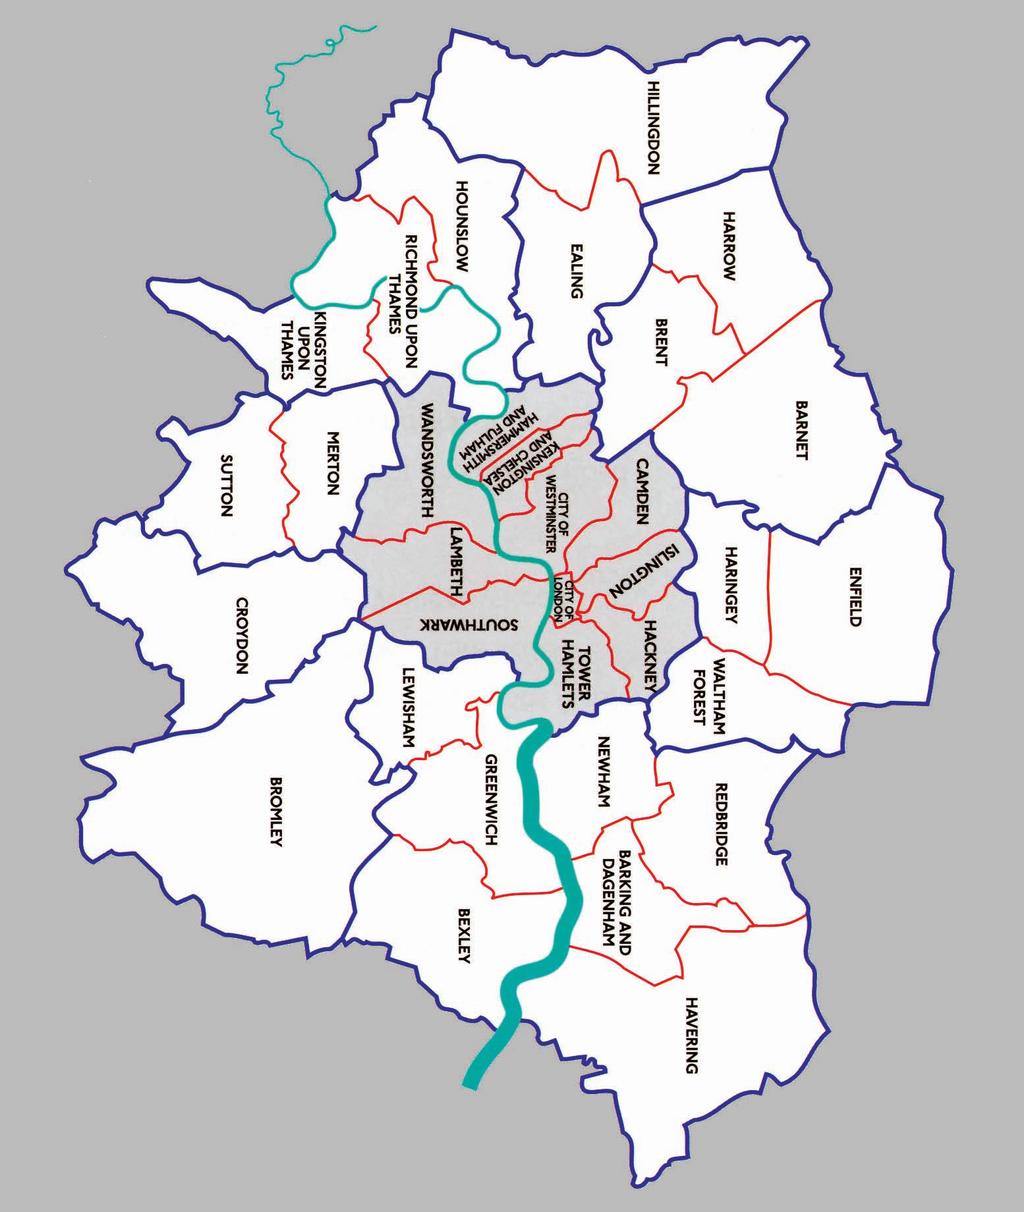 Greater London Borough